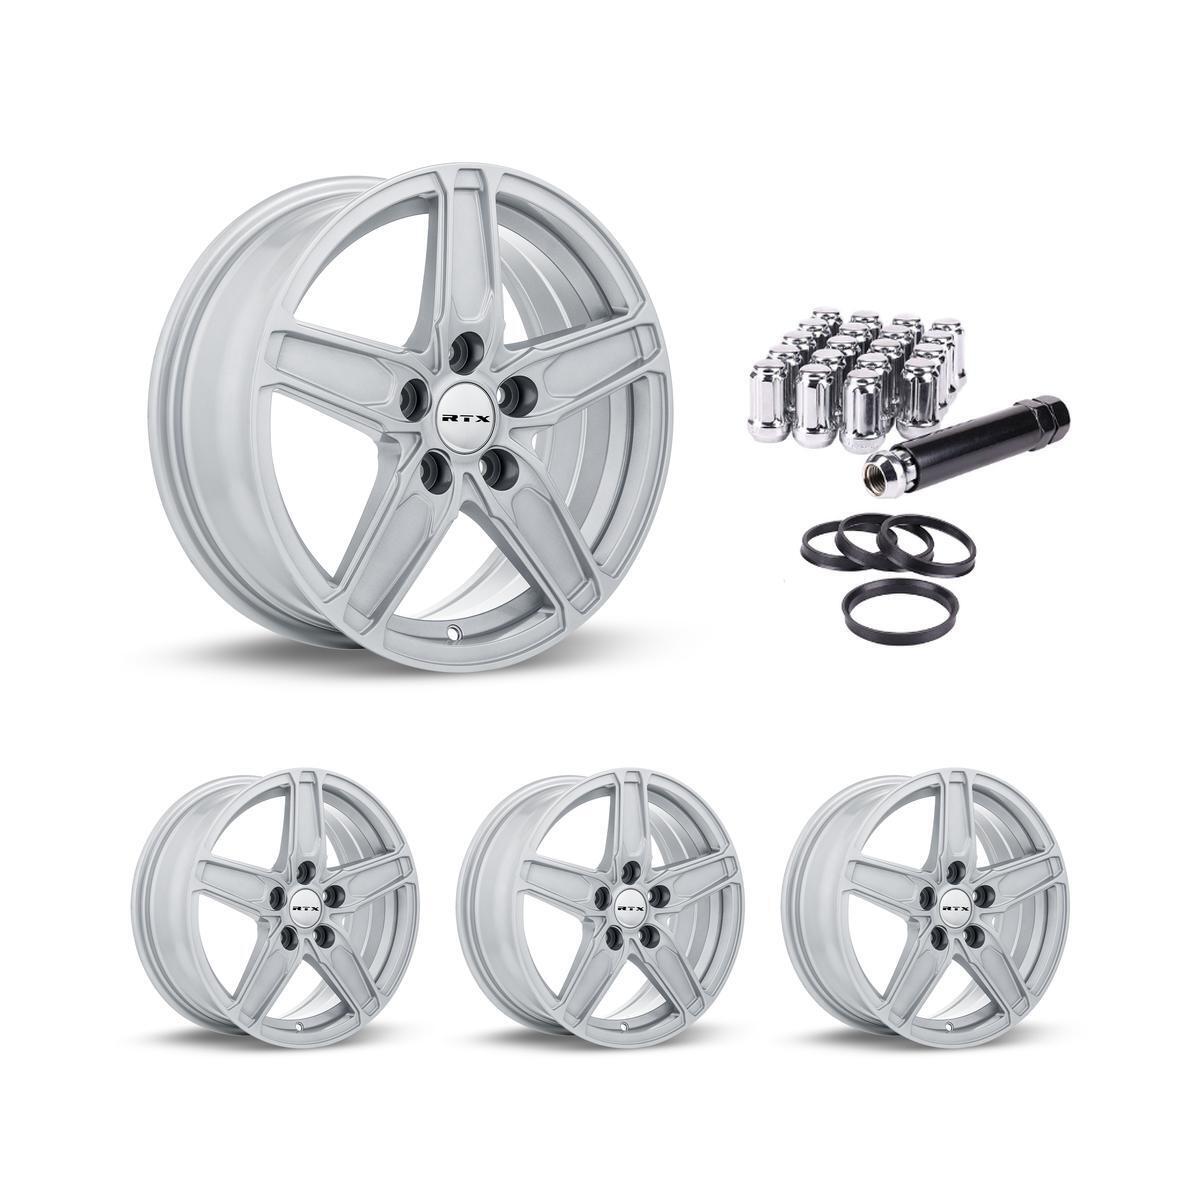 Wheel Rims Set with Chrome Lug Nuts Kit for 92-03 Lexus ES300 P852926 17 inch